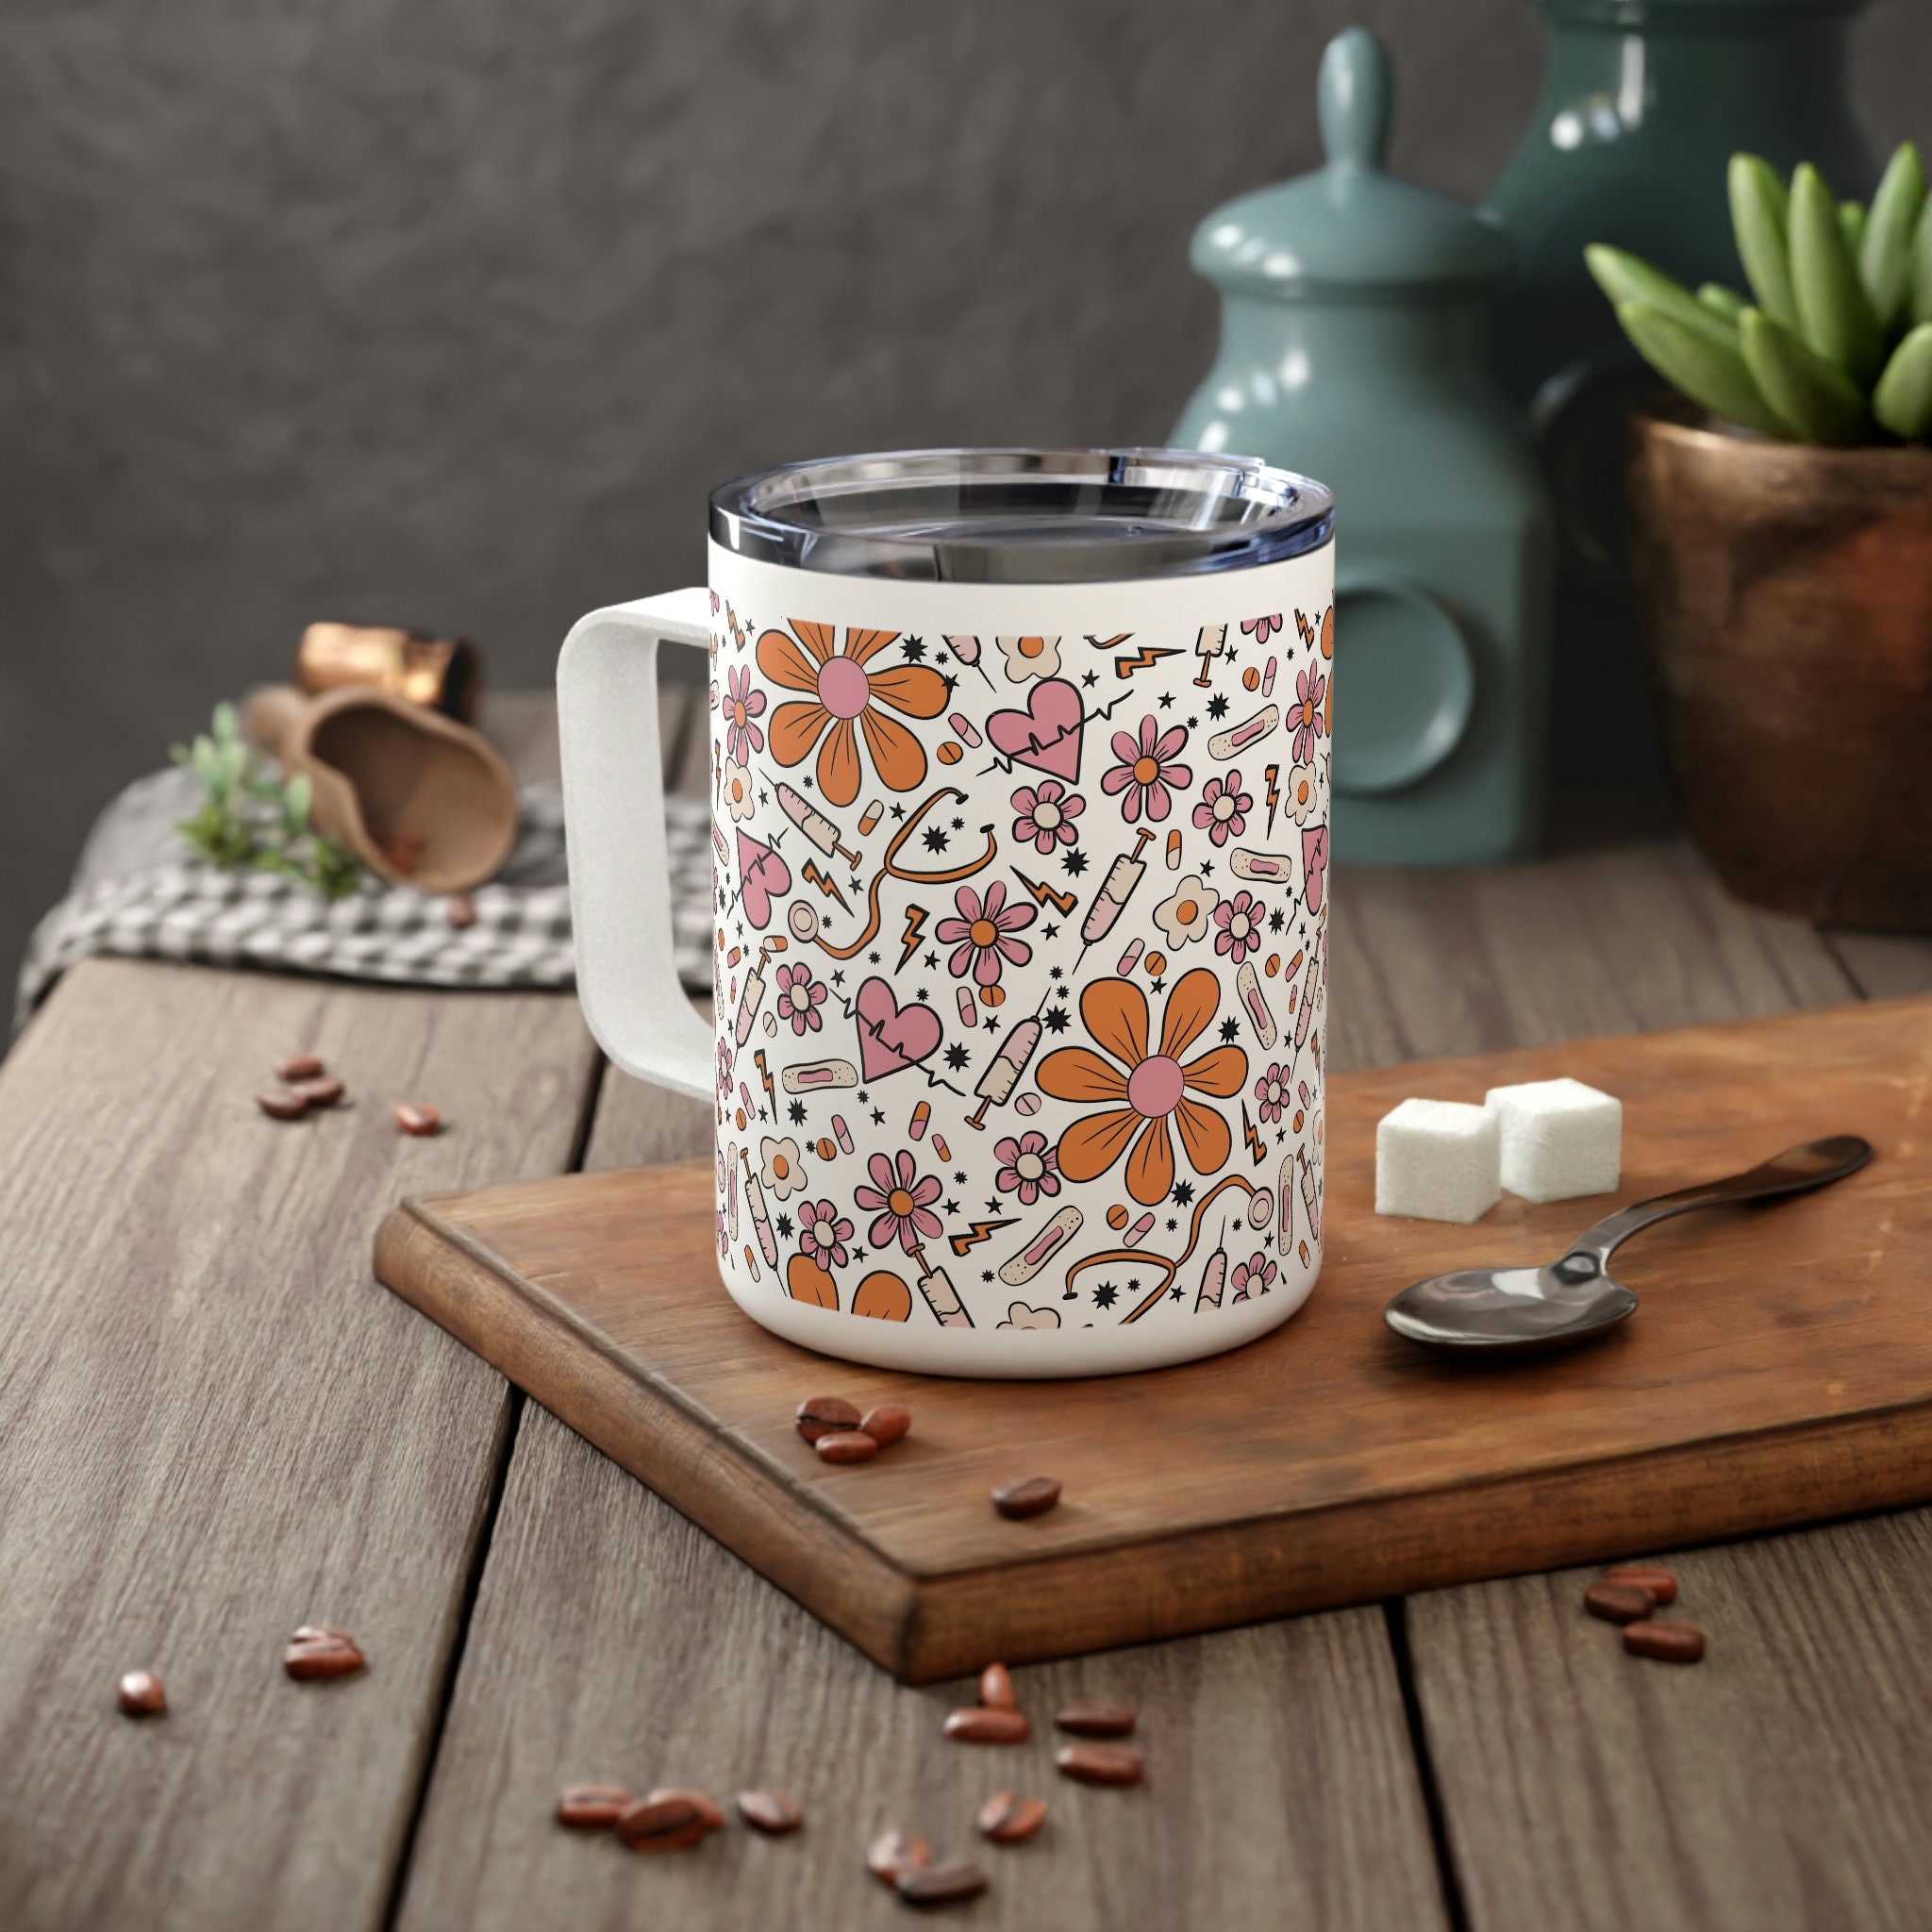 Ceramic Coffee Mug - 15 oz Retro Inspired Camping Mug - for Hot & Cold  Drinks - Works as a Tea, Soup…See more Ceramic Coffee Mug - 15 oz Retro